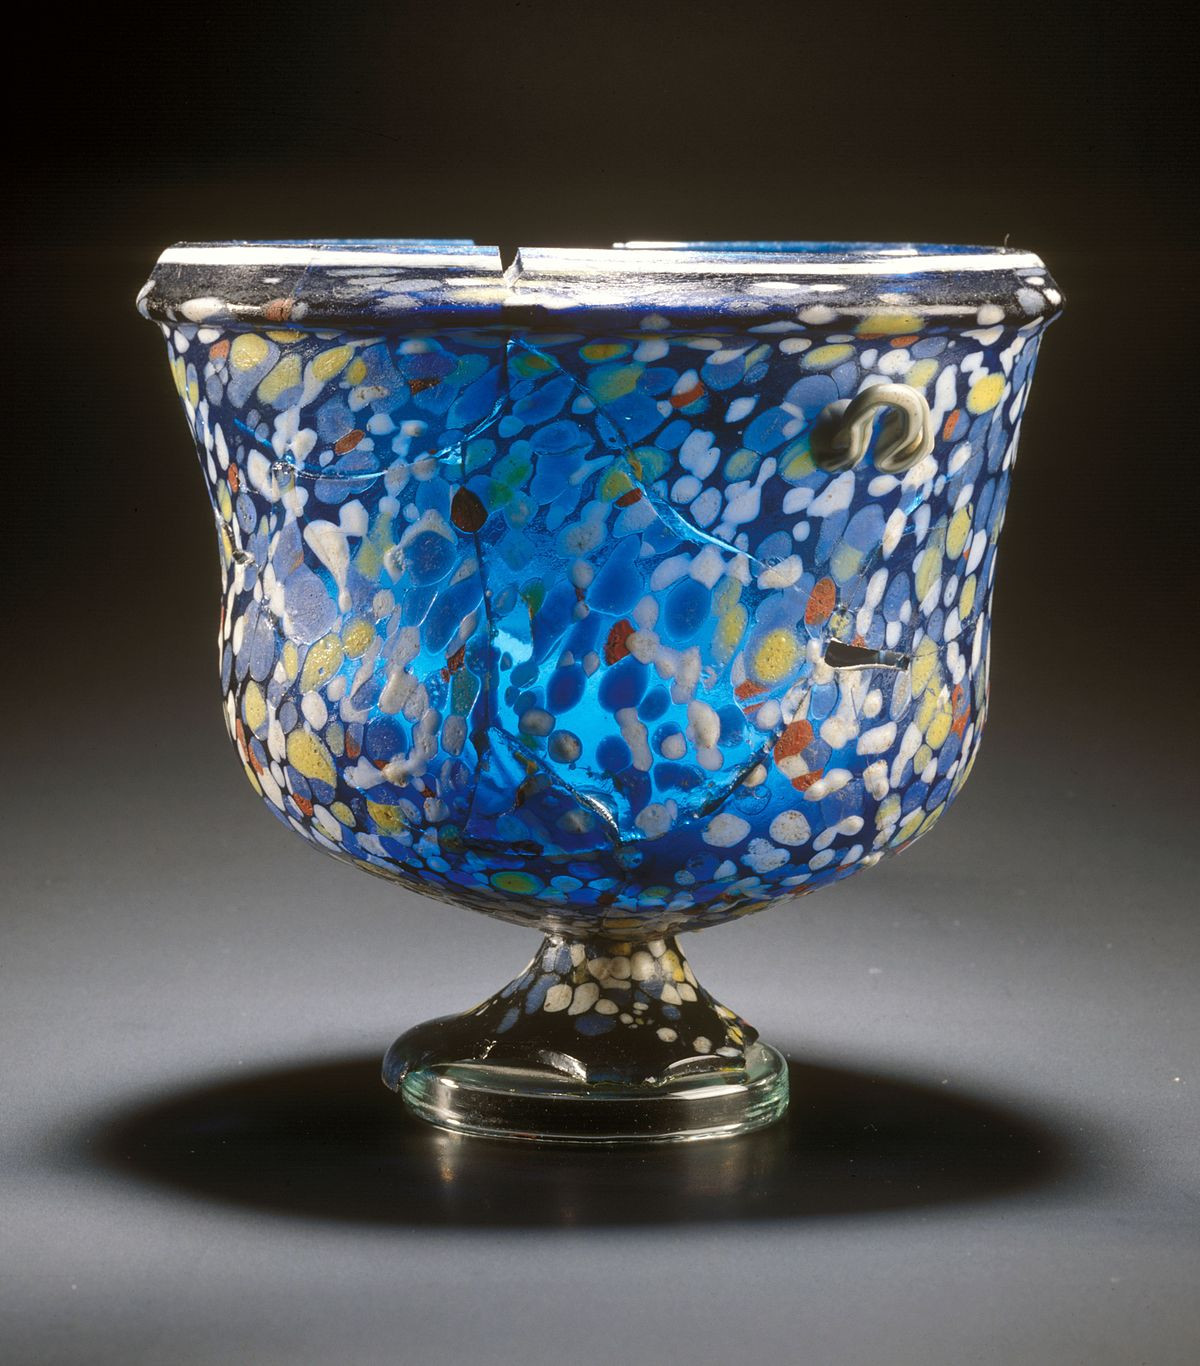 27 Lovely Small Navy Blue Vase 2024 free download small navy blue vase of glass art wikipedia regarding 1200px emona trgovina in obrt 1a